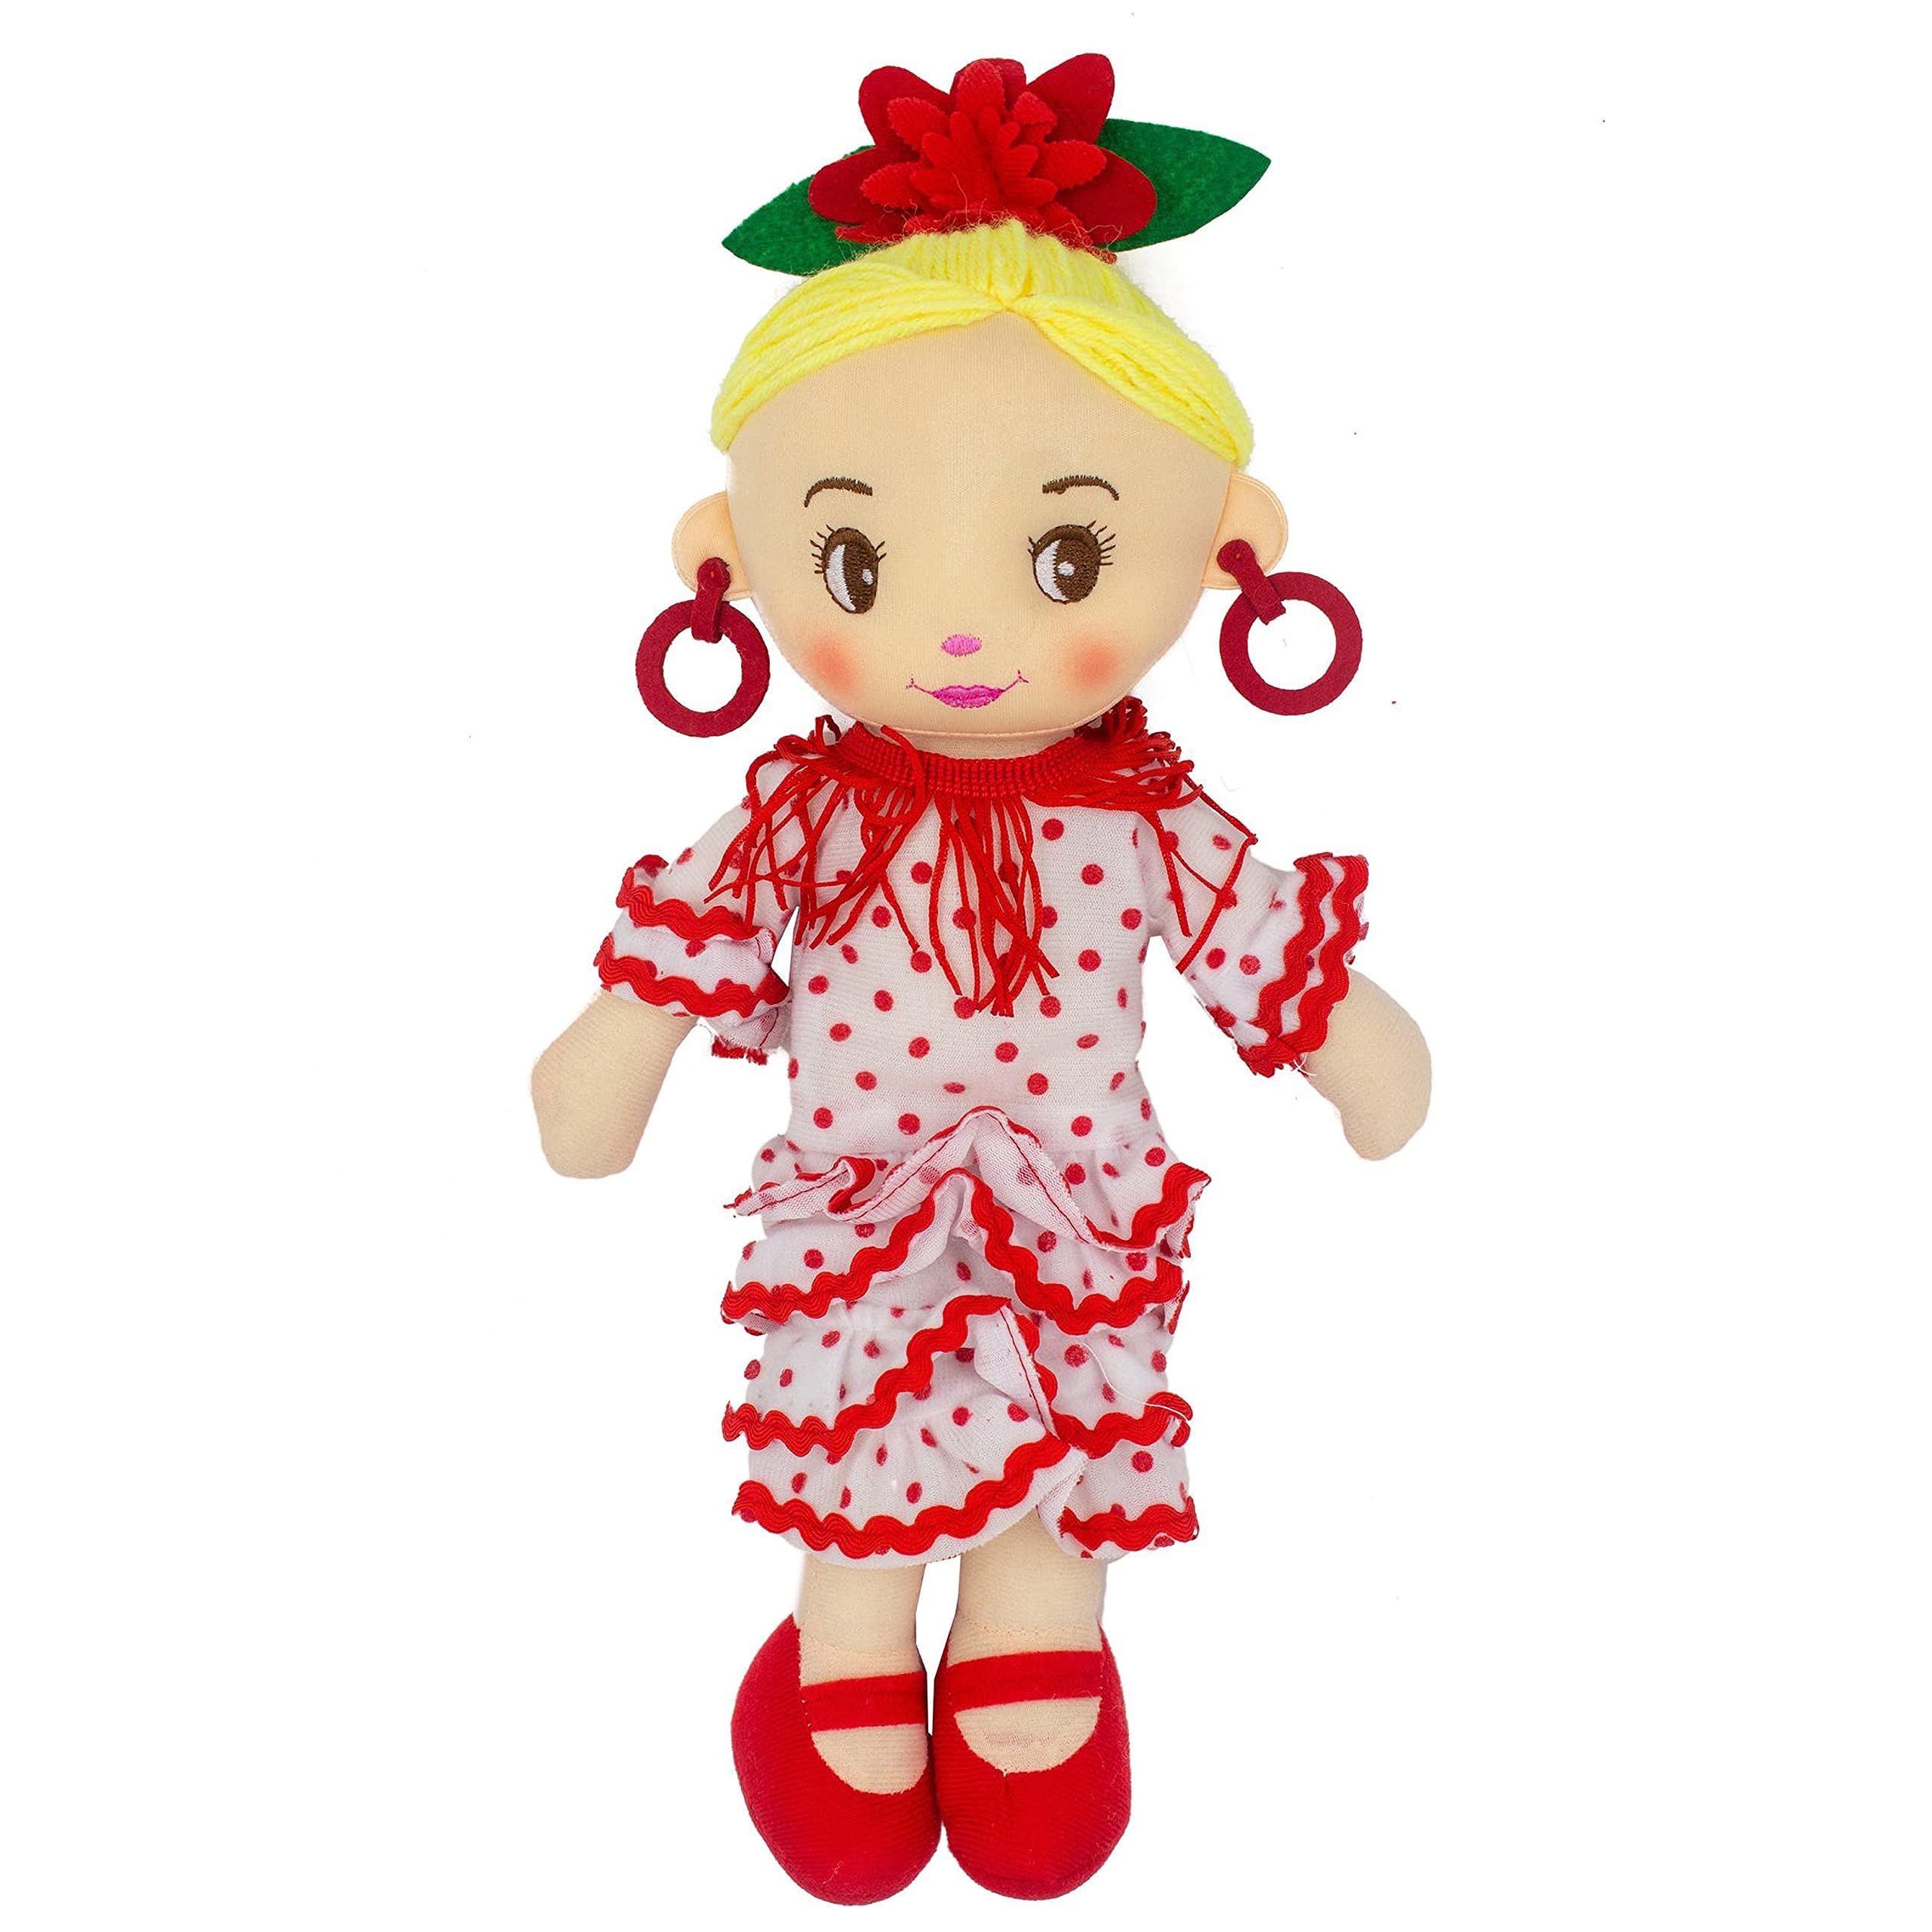 Ole Ole Flamenco Stuffed Doll Souvenir Blonde Hair